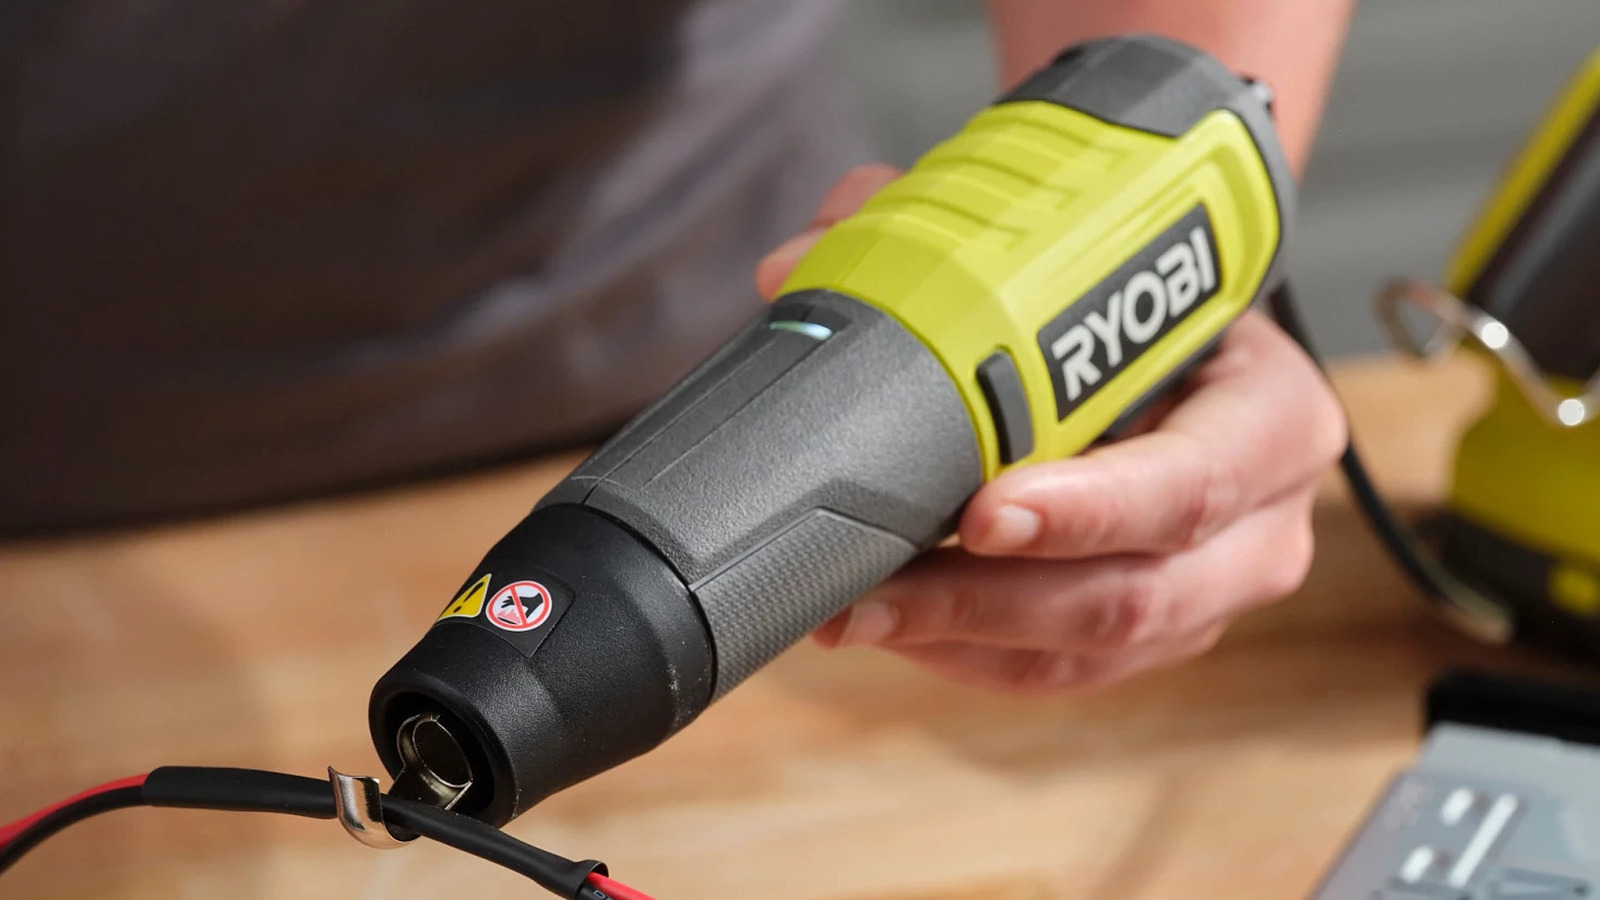 Ryobi 18V One+ Cordless Heat Pen PCL916 - Pro Tool Reviews